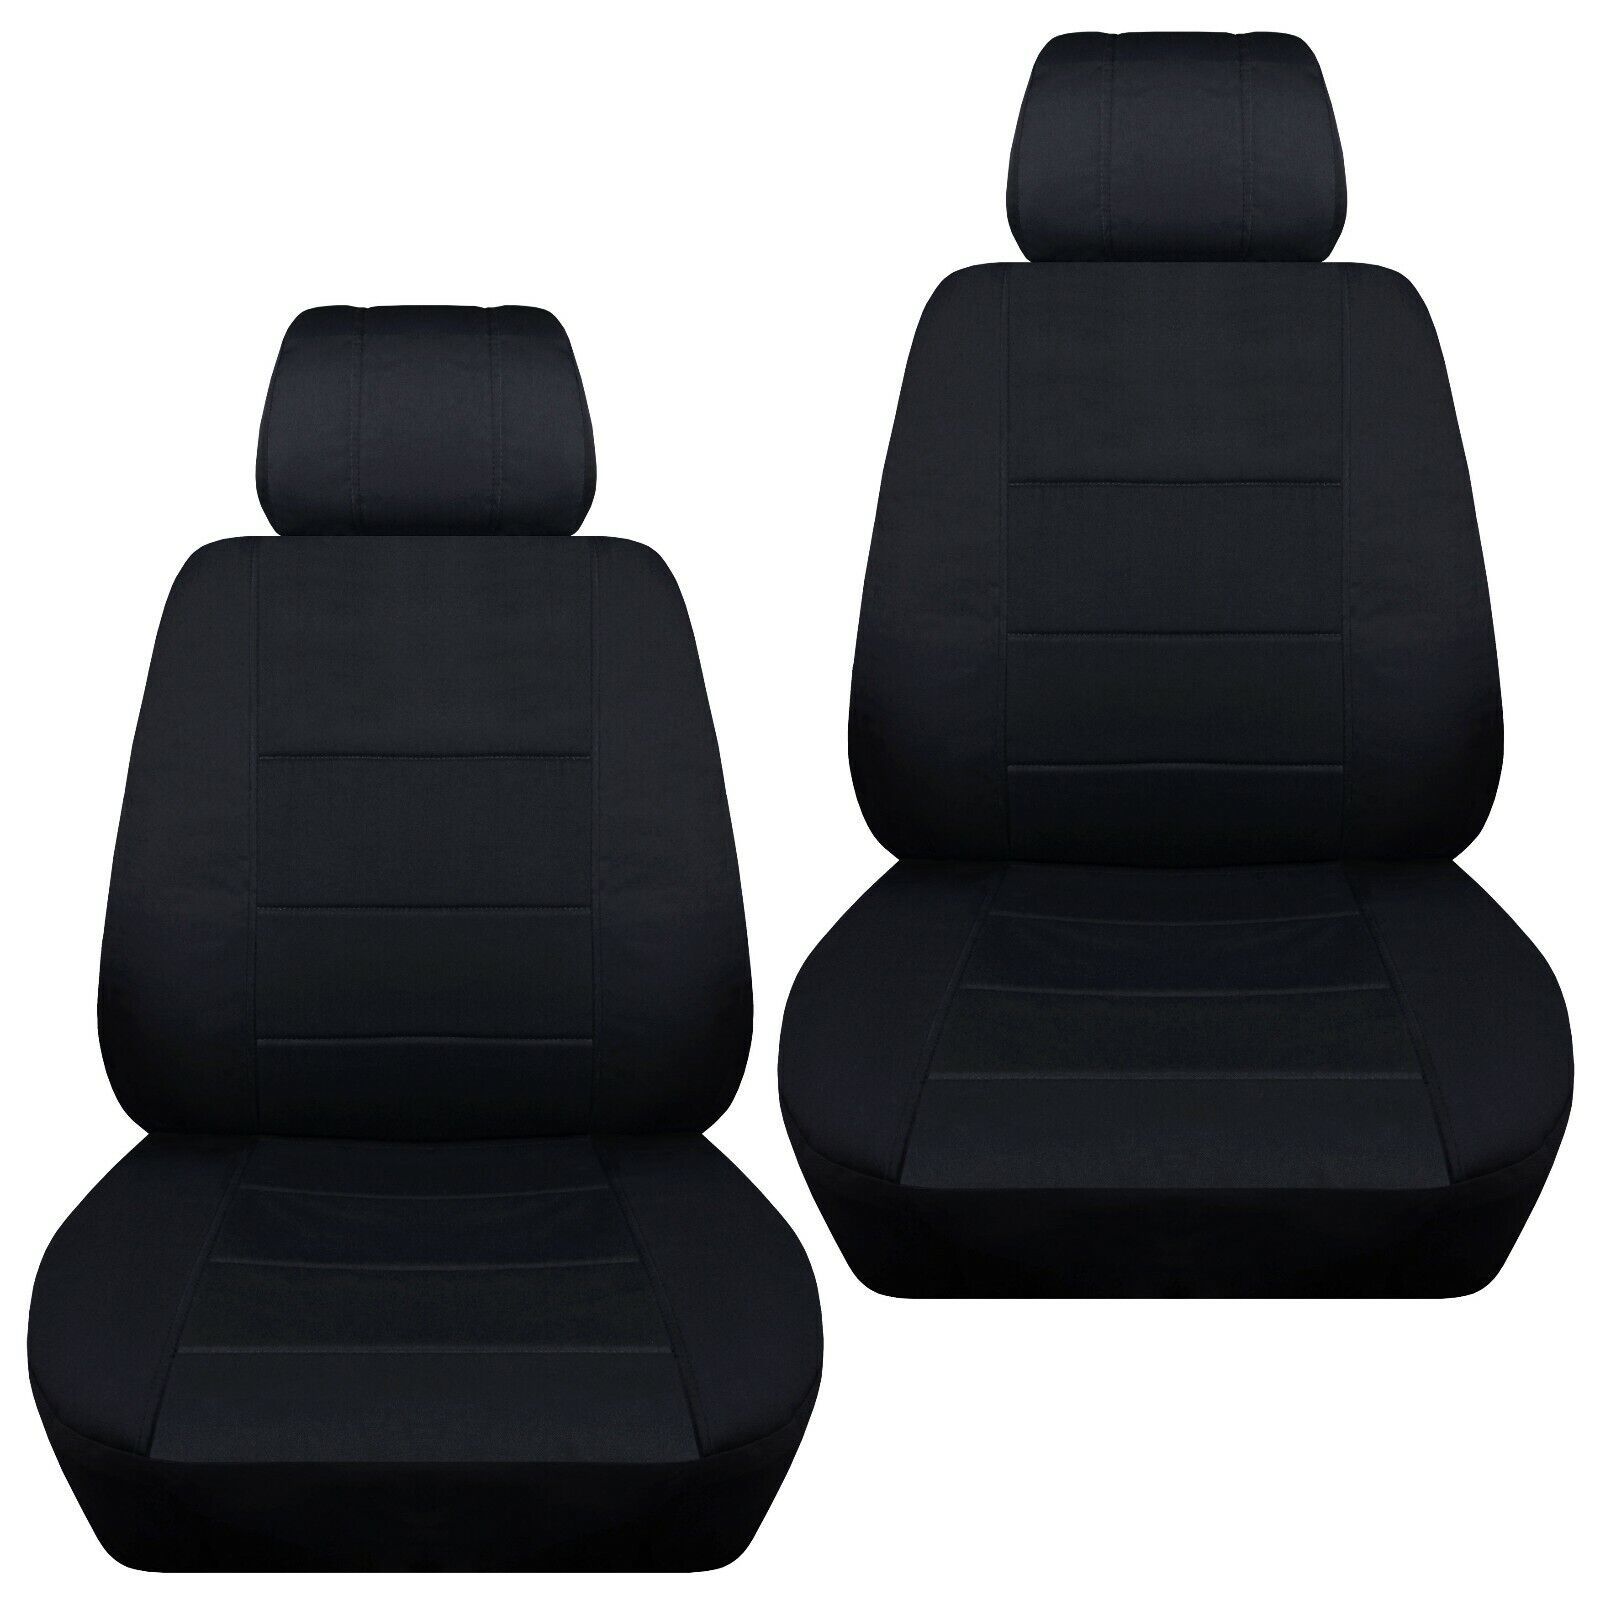 Front set car seat covers fits 1997-2019 Honda CR-V      solid black - $65.09 - $76.31